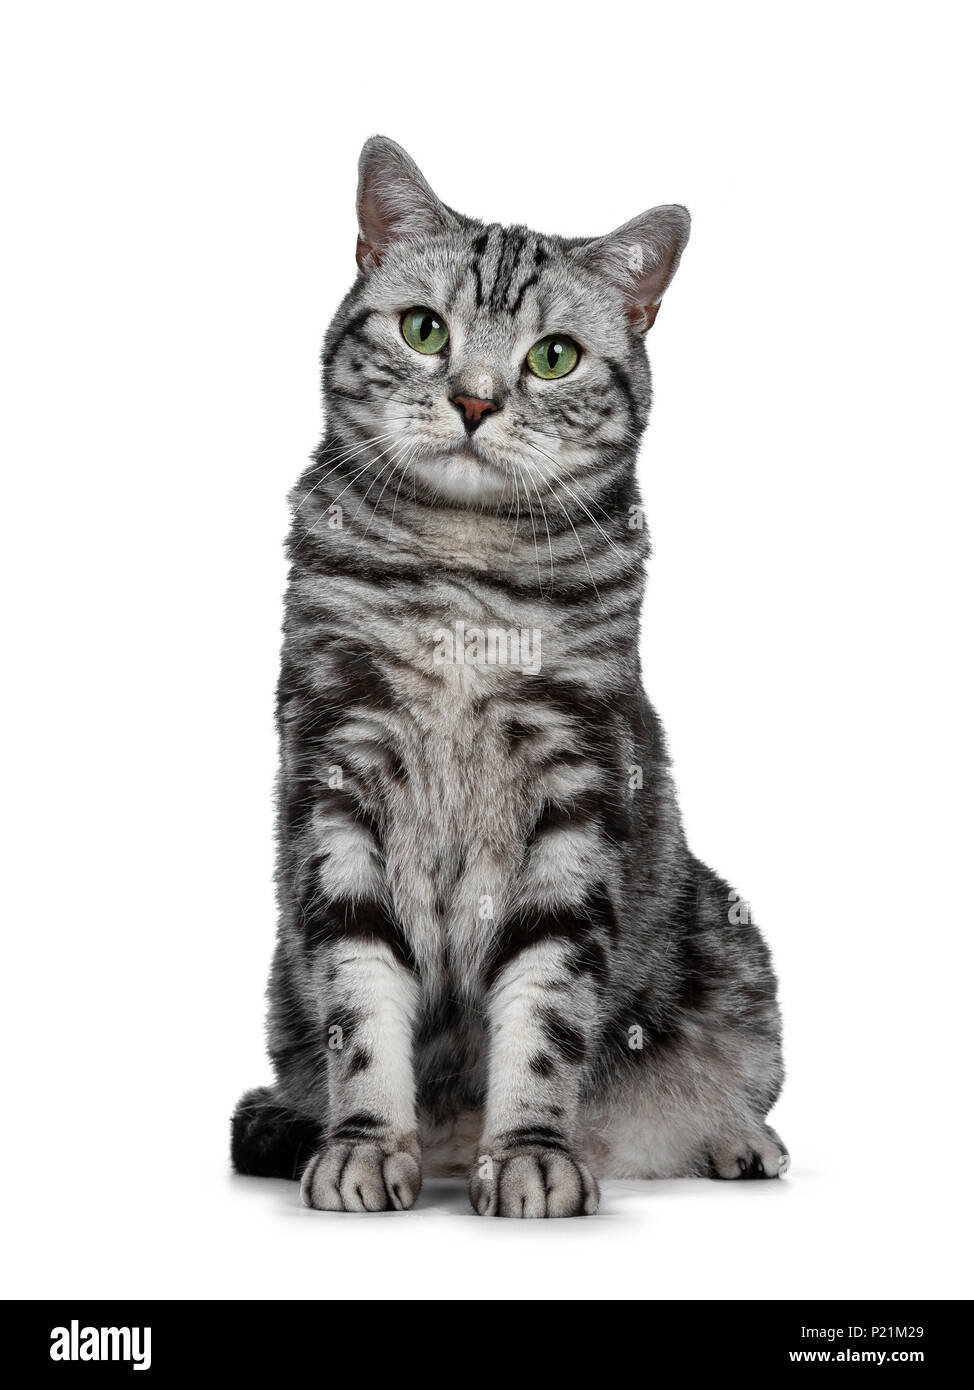 Beau black silver tabby British Shorthair chat assis bien droit isolé sur fond blanc et looking at camera Banque D'Images